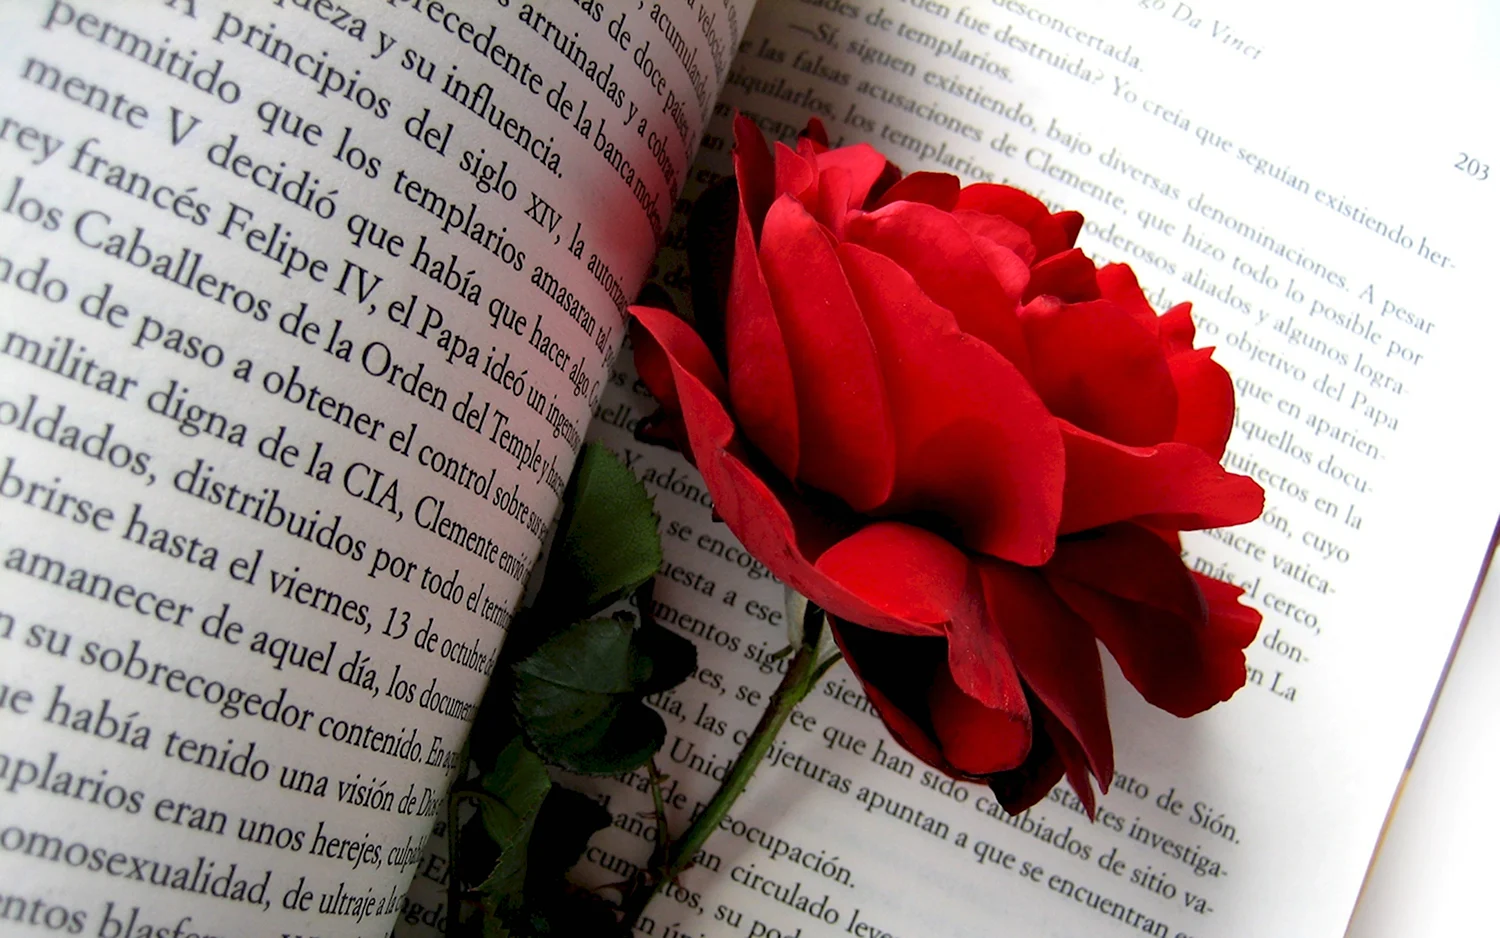 Роза на книге